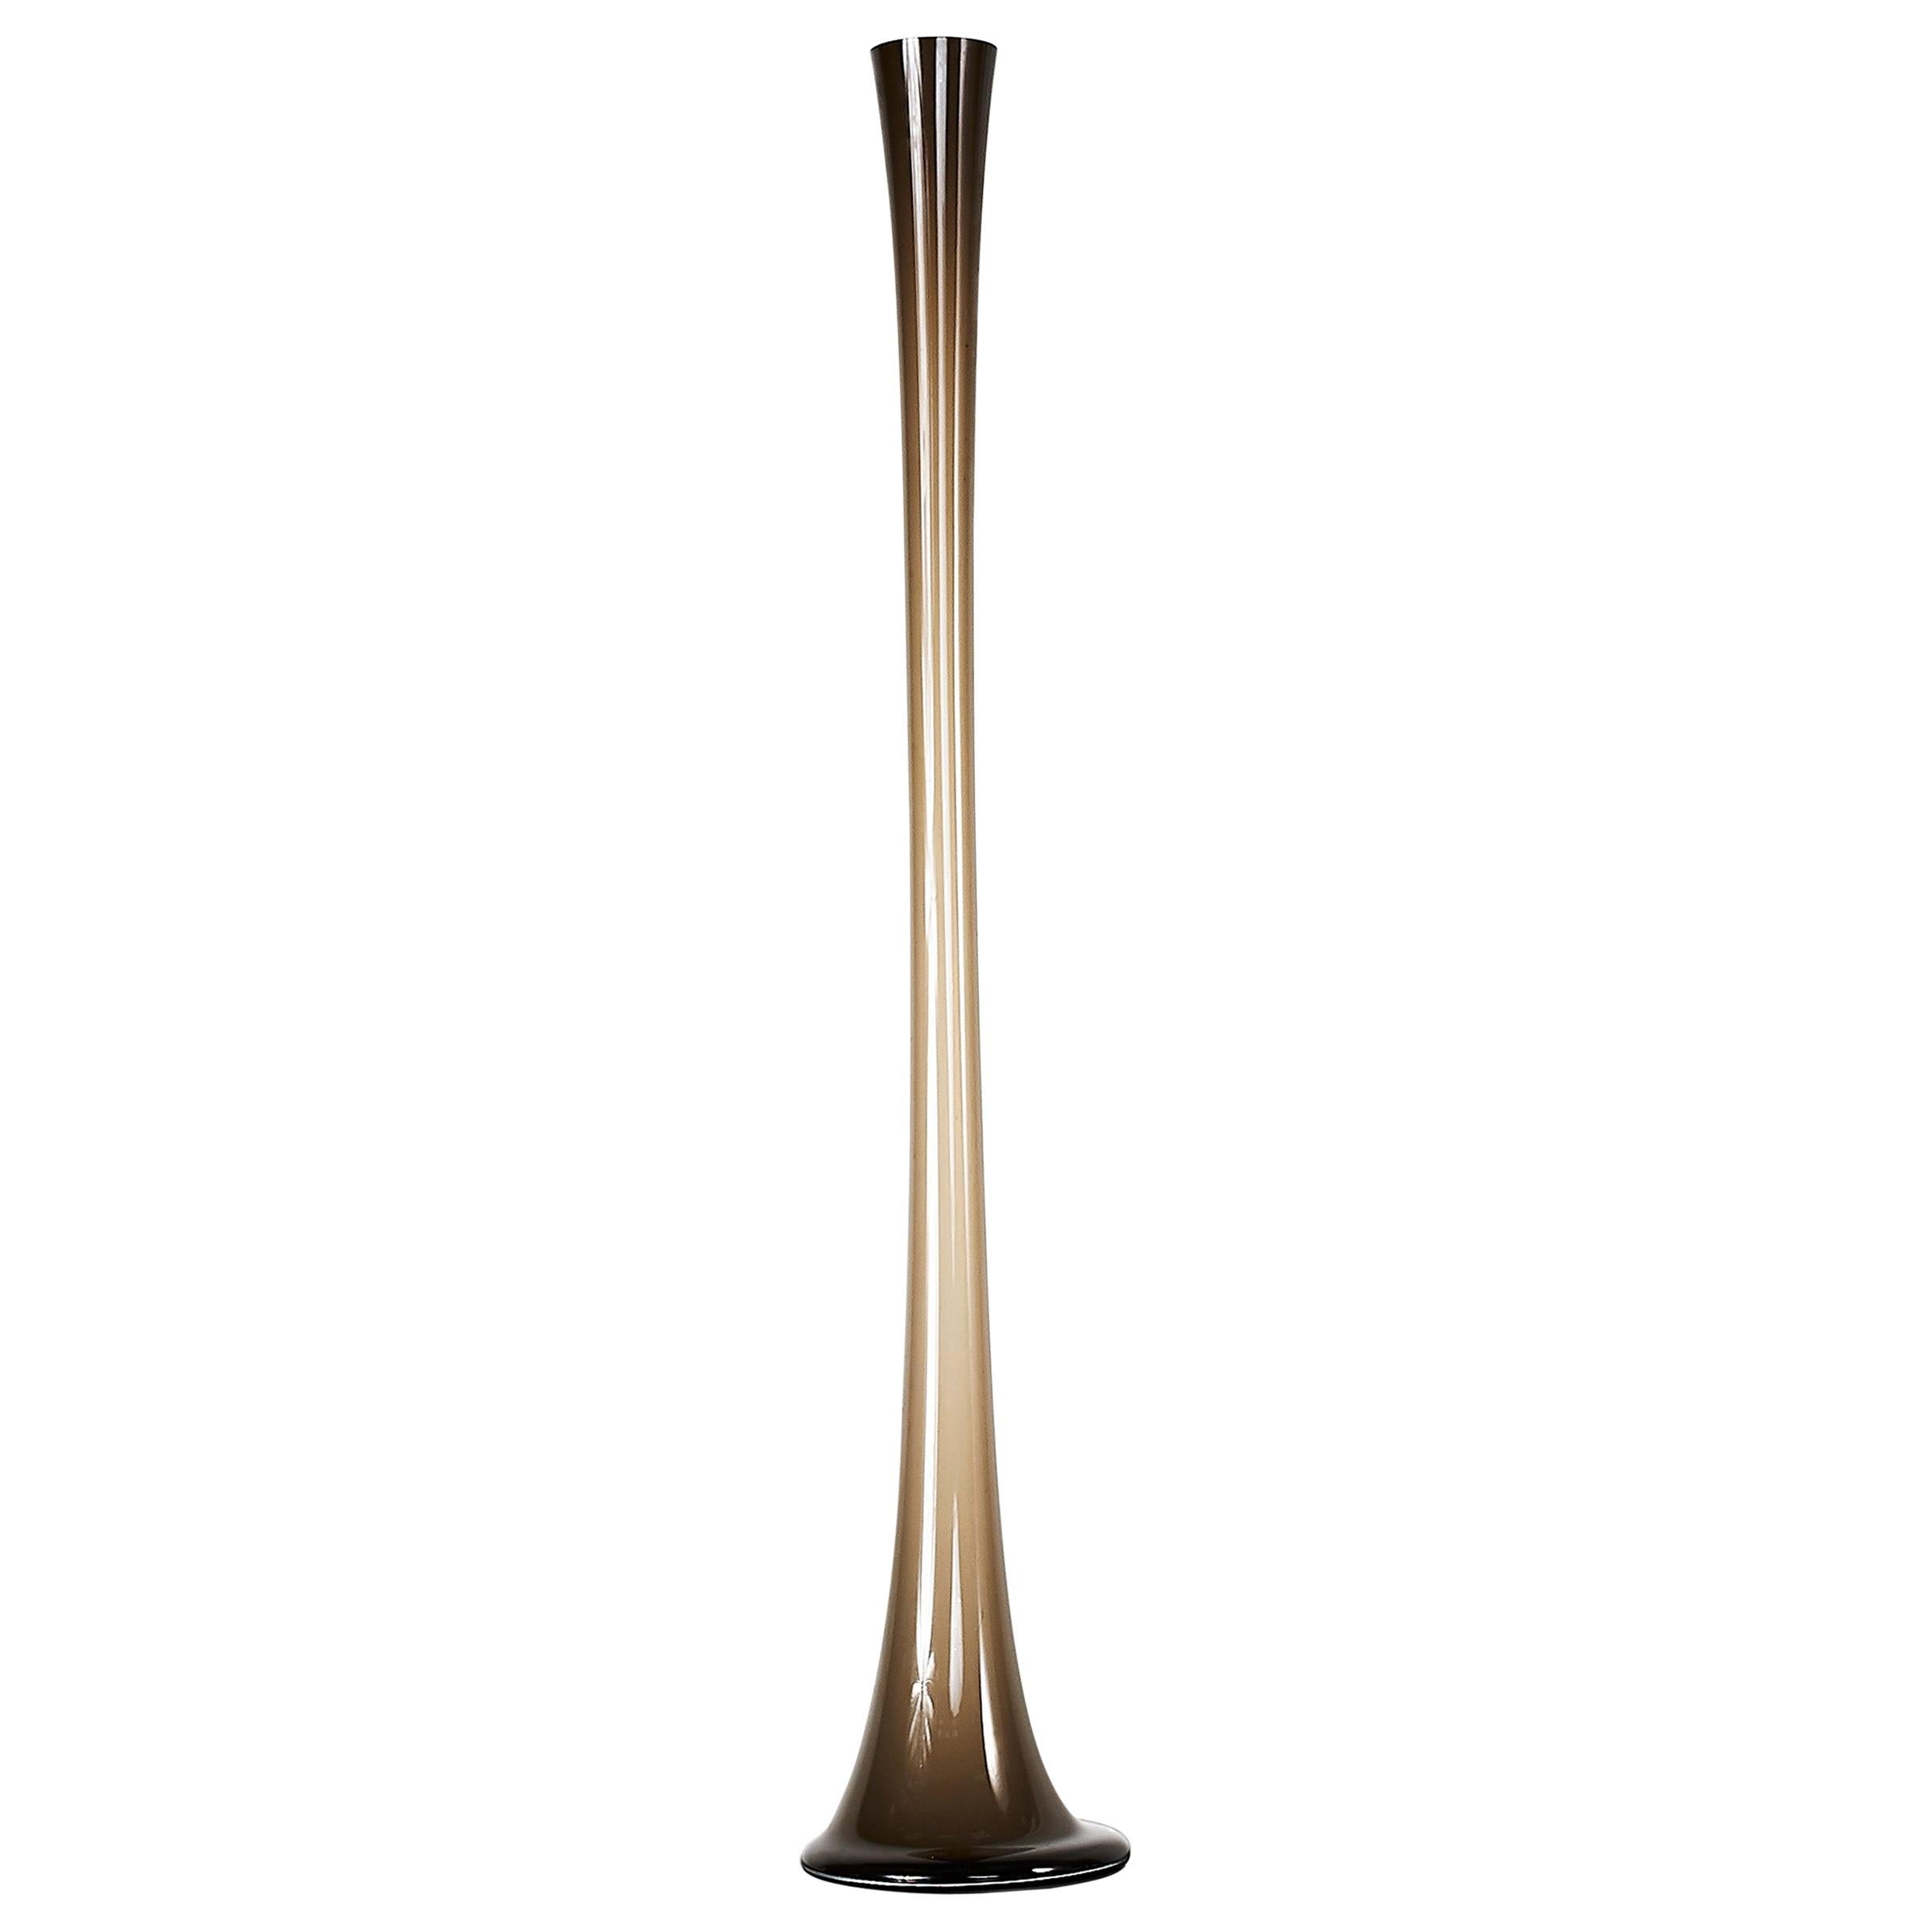 Exquisite Murano Glass Mid-Century Modern Tulip Floor Vase Monumentally Tall